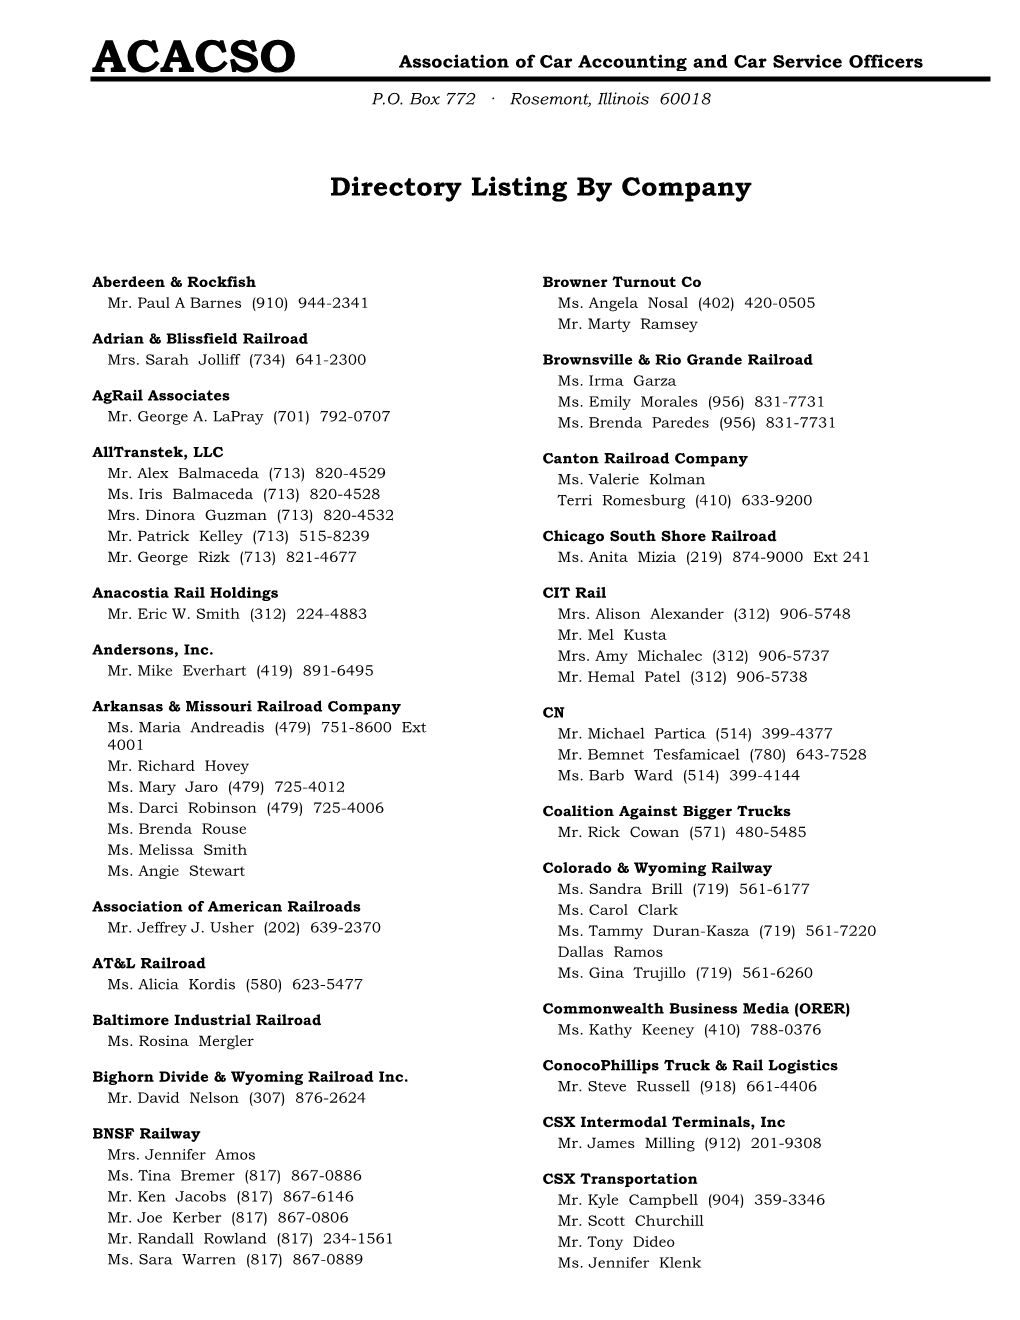 Web Directory by Company